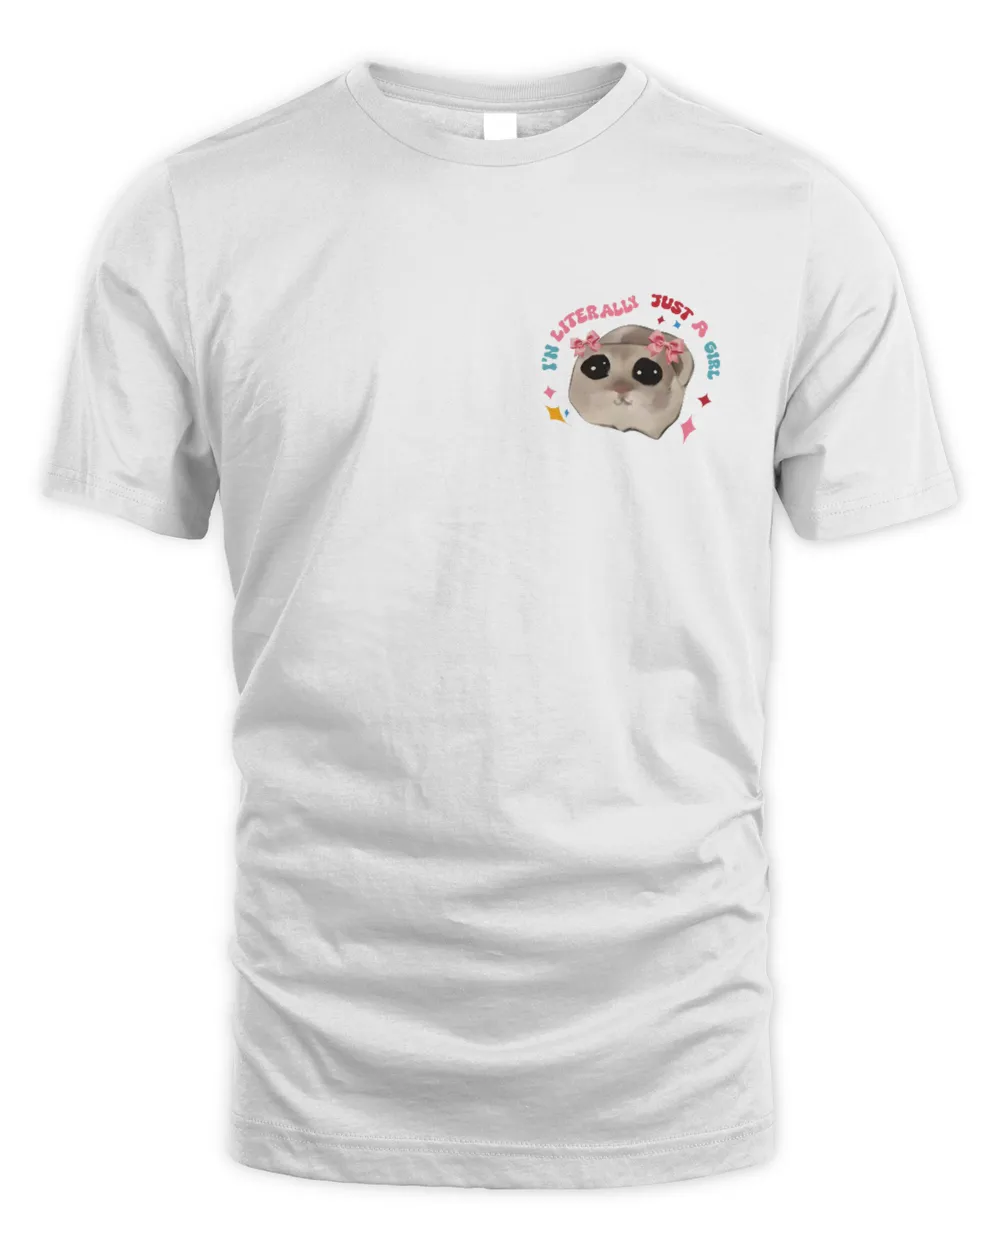 I'm Literally Just A Girl Sad Hamster Meme Shirt, Cute Sad Hamster Tee, Animal Lover Gift, Cute Coquette Hamster Meme, Funny Meme Gifts